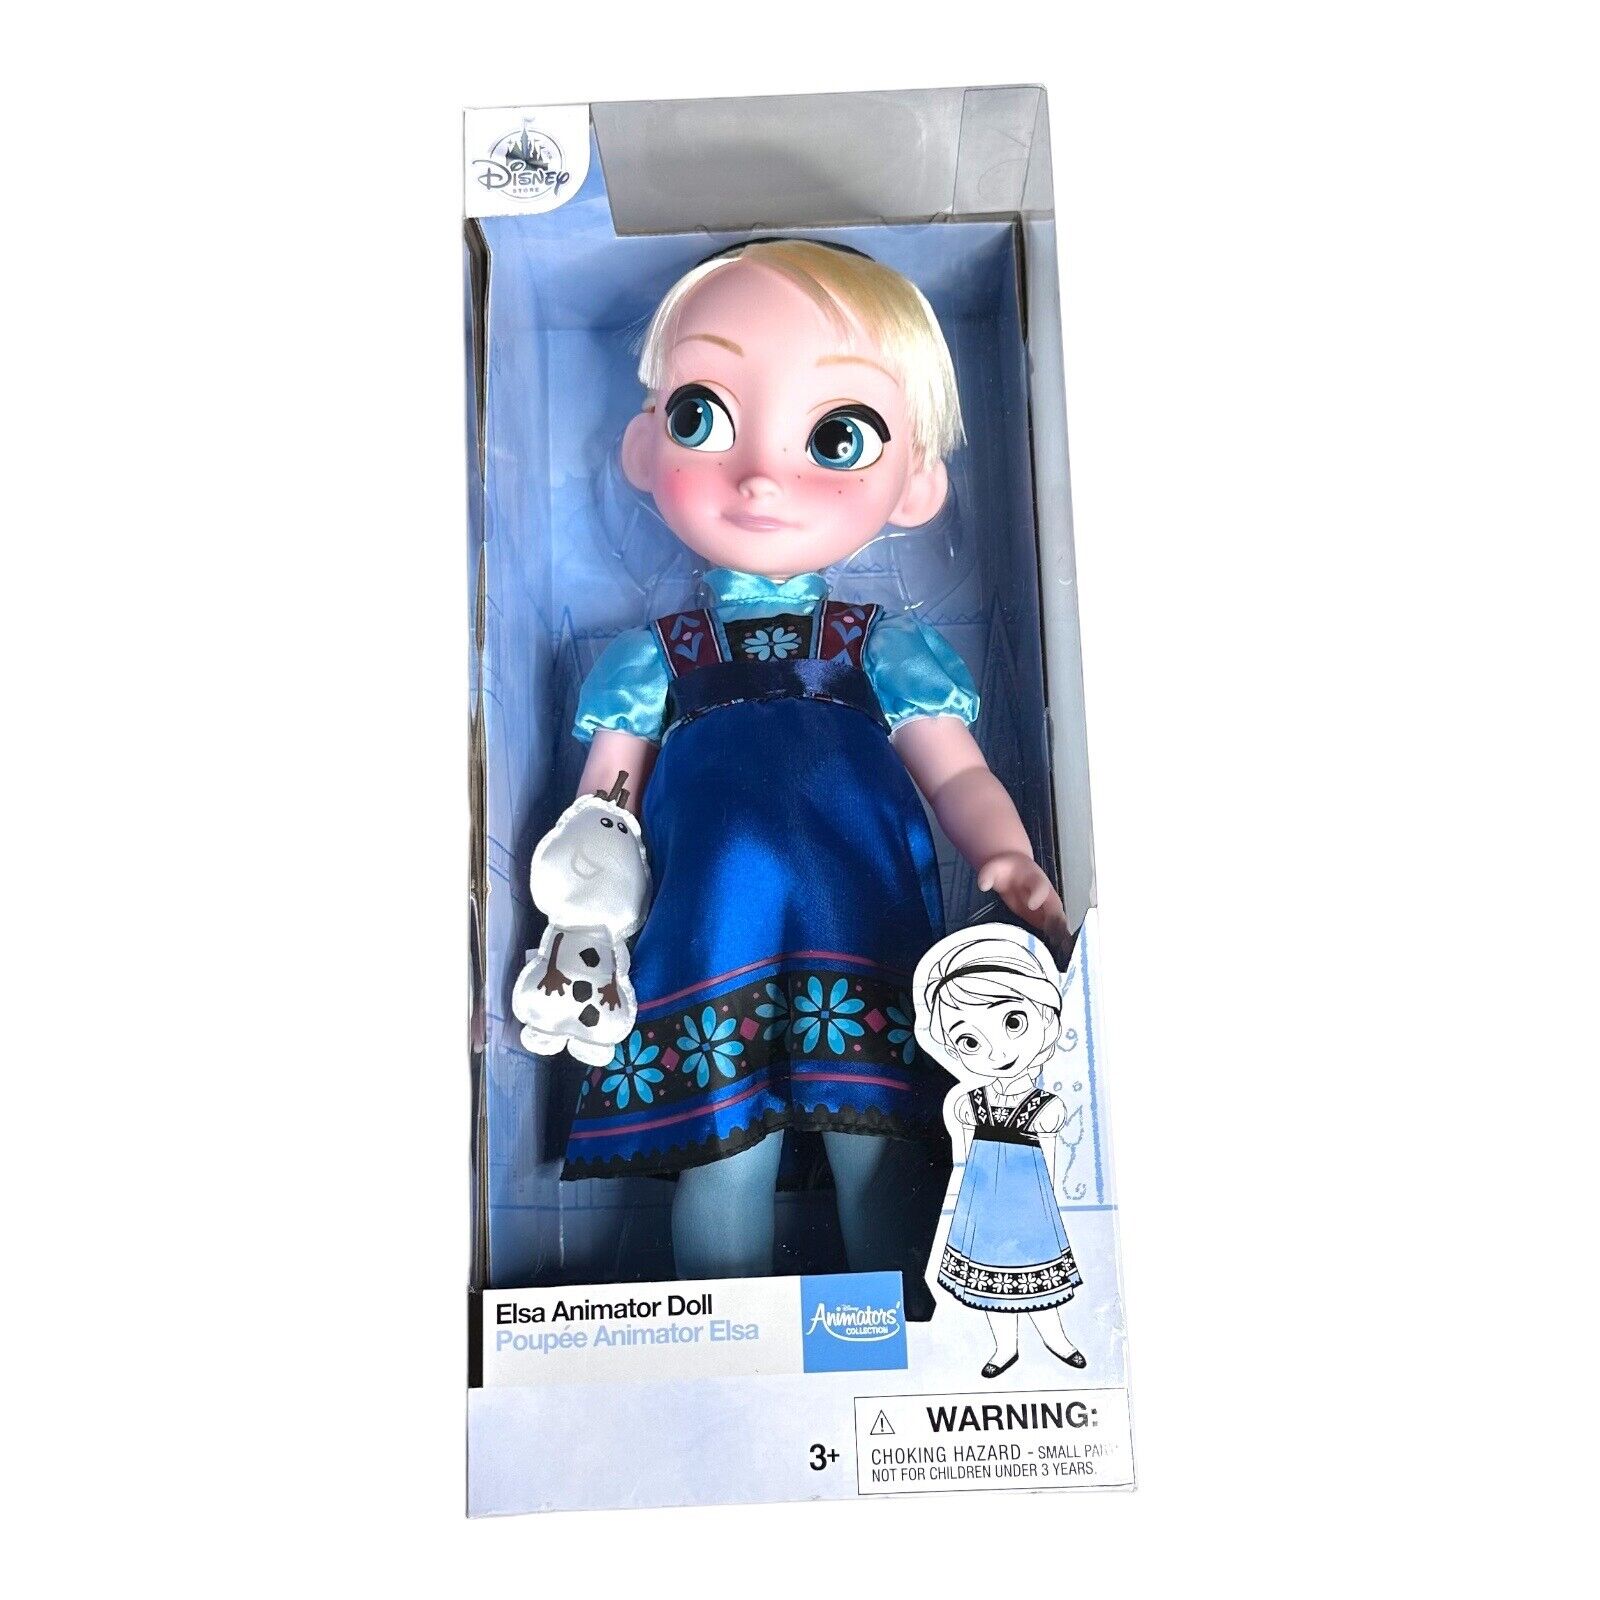 Disney Animators' Collection Elsa Animator Doll